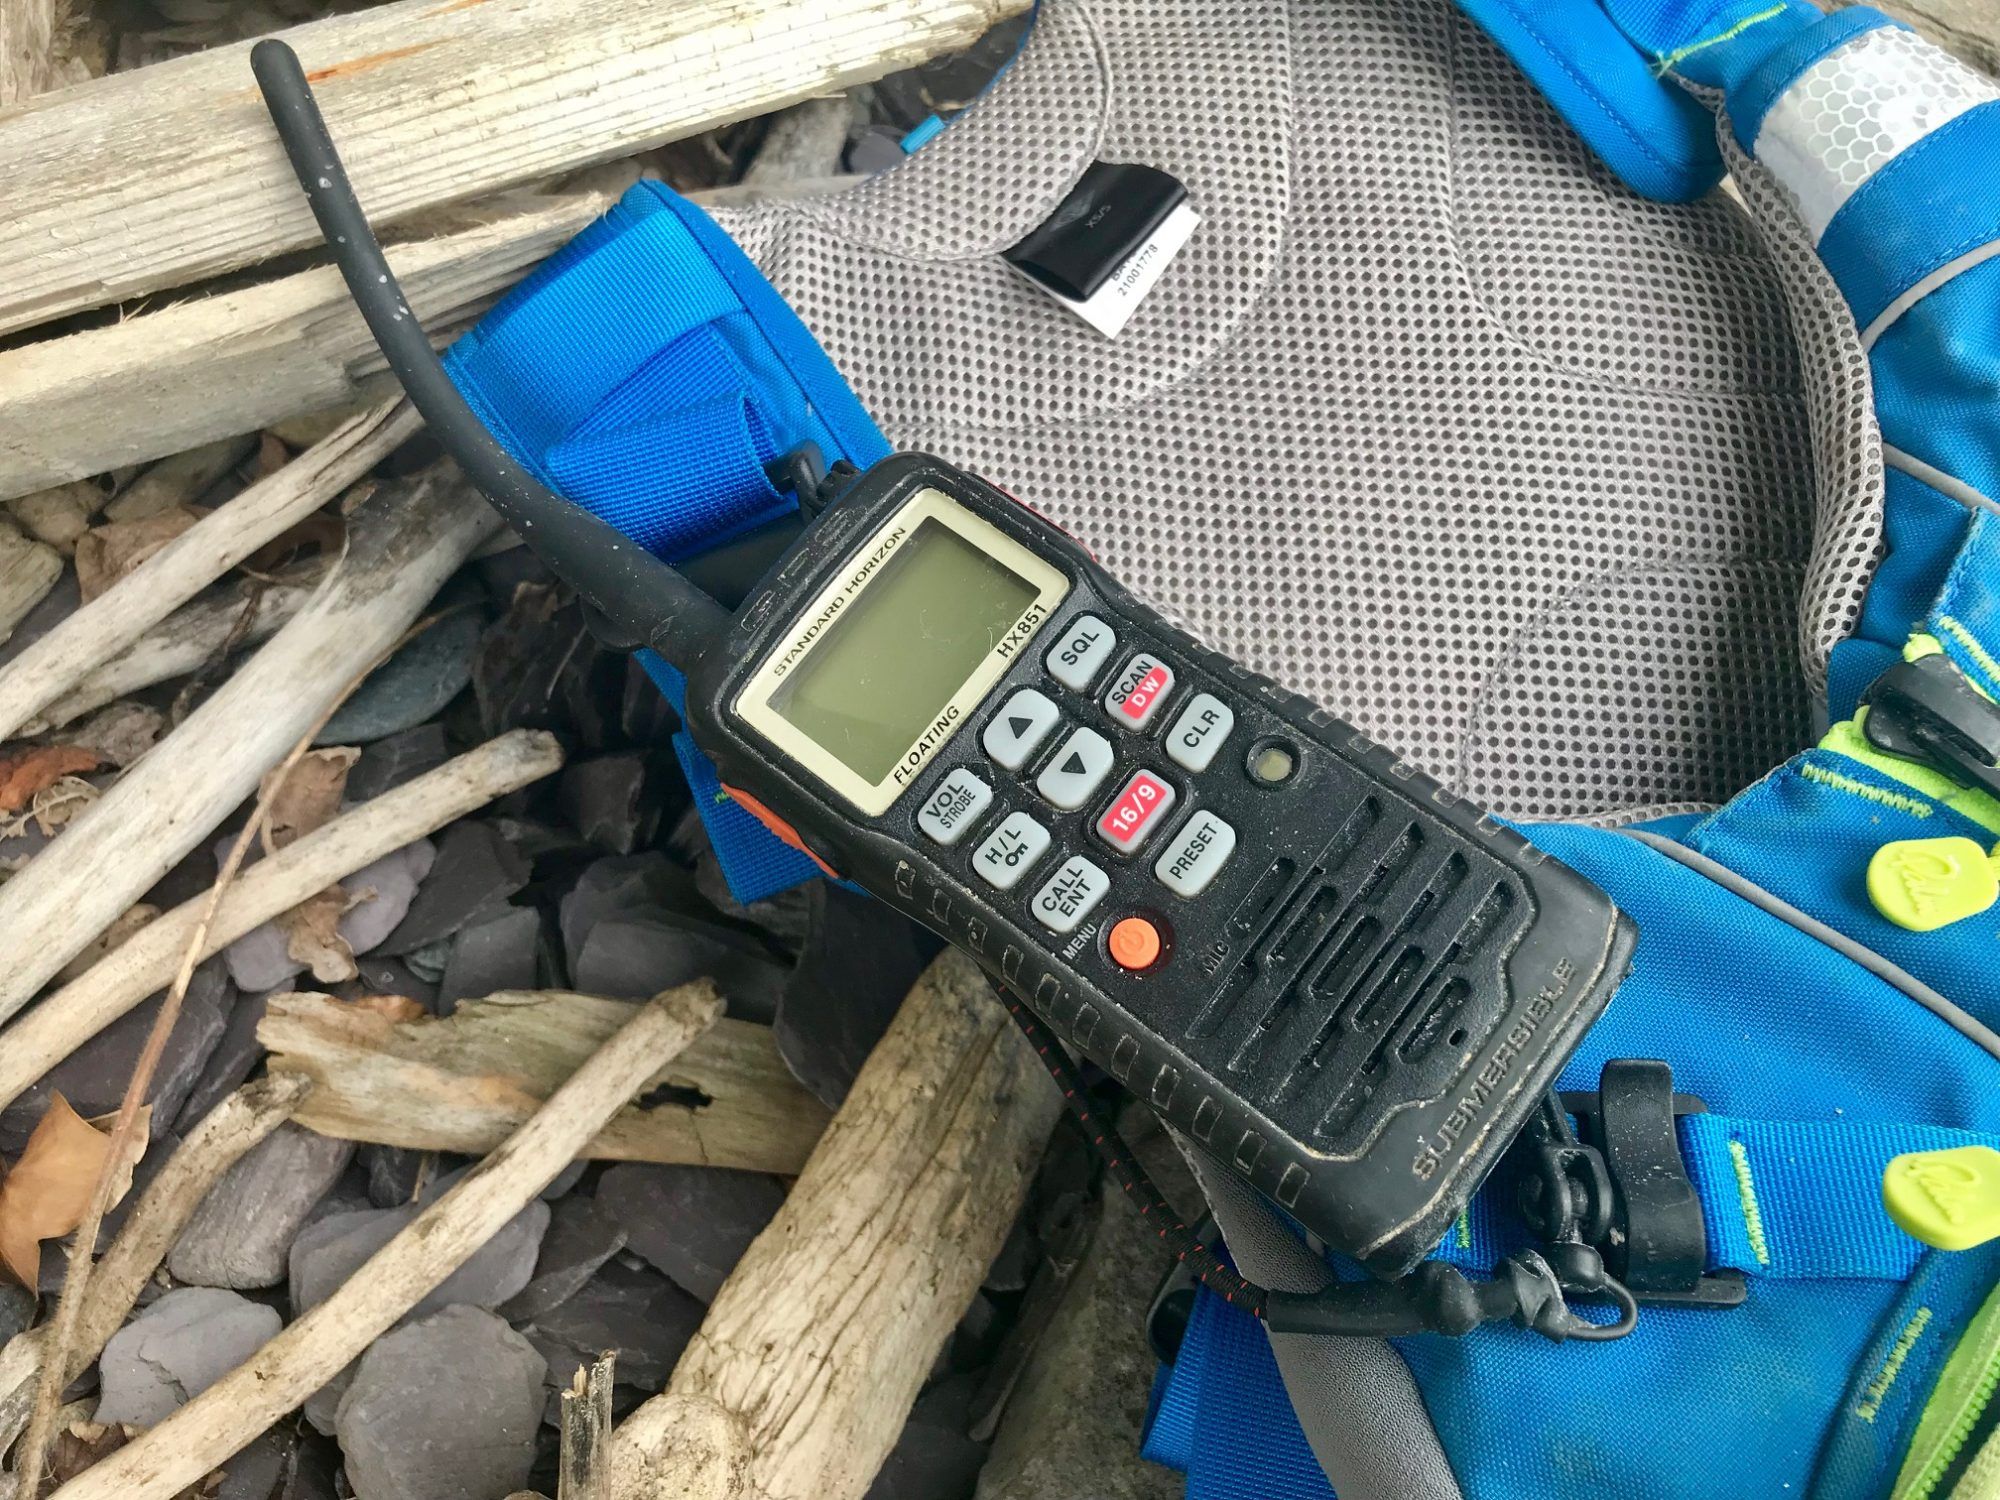 VHF Radio on a Palm Kaikoura Buoyanc Aid